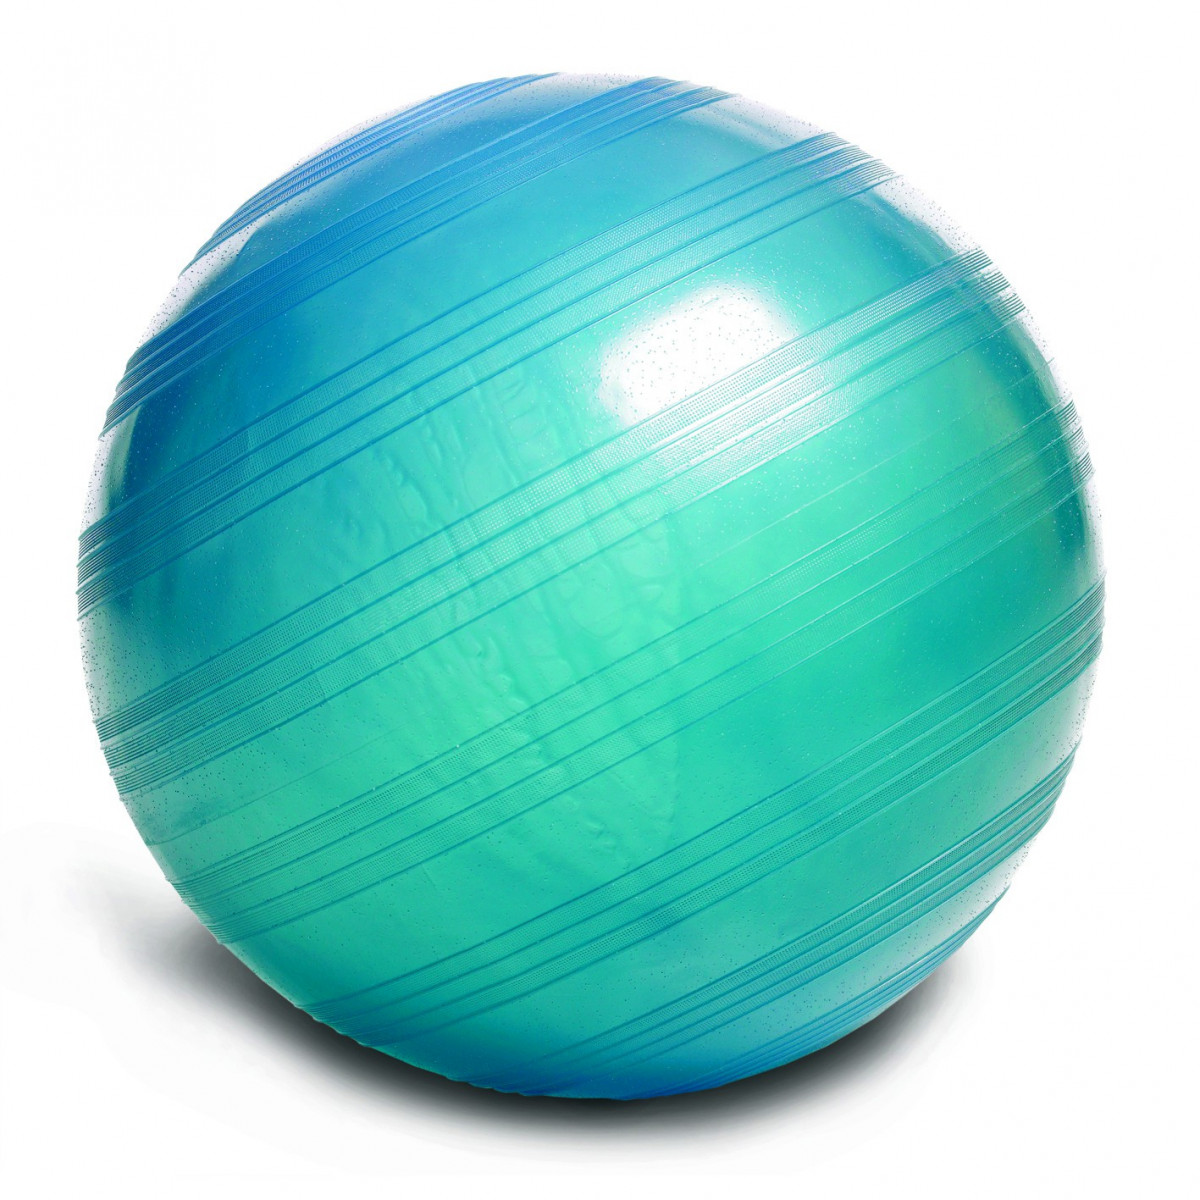 Balon de gymnastique Powerball Extreme ABS TOGU® - Swiss Ball